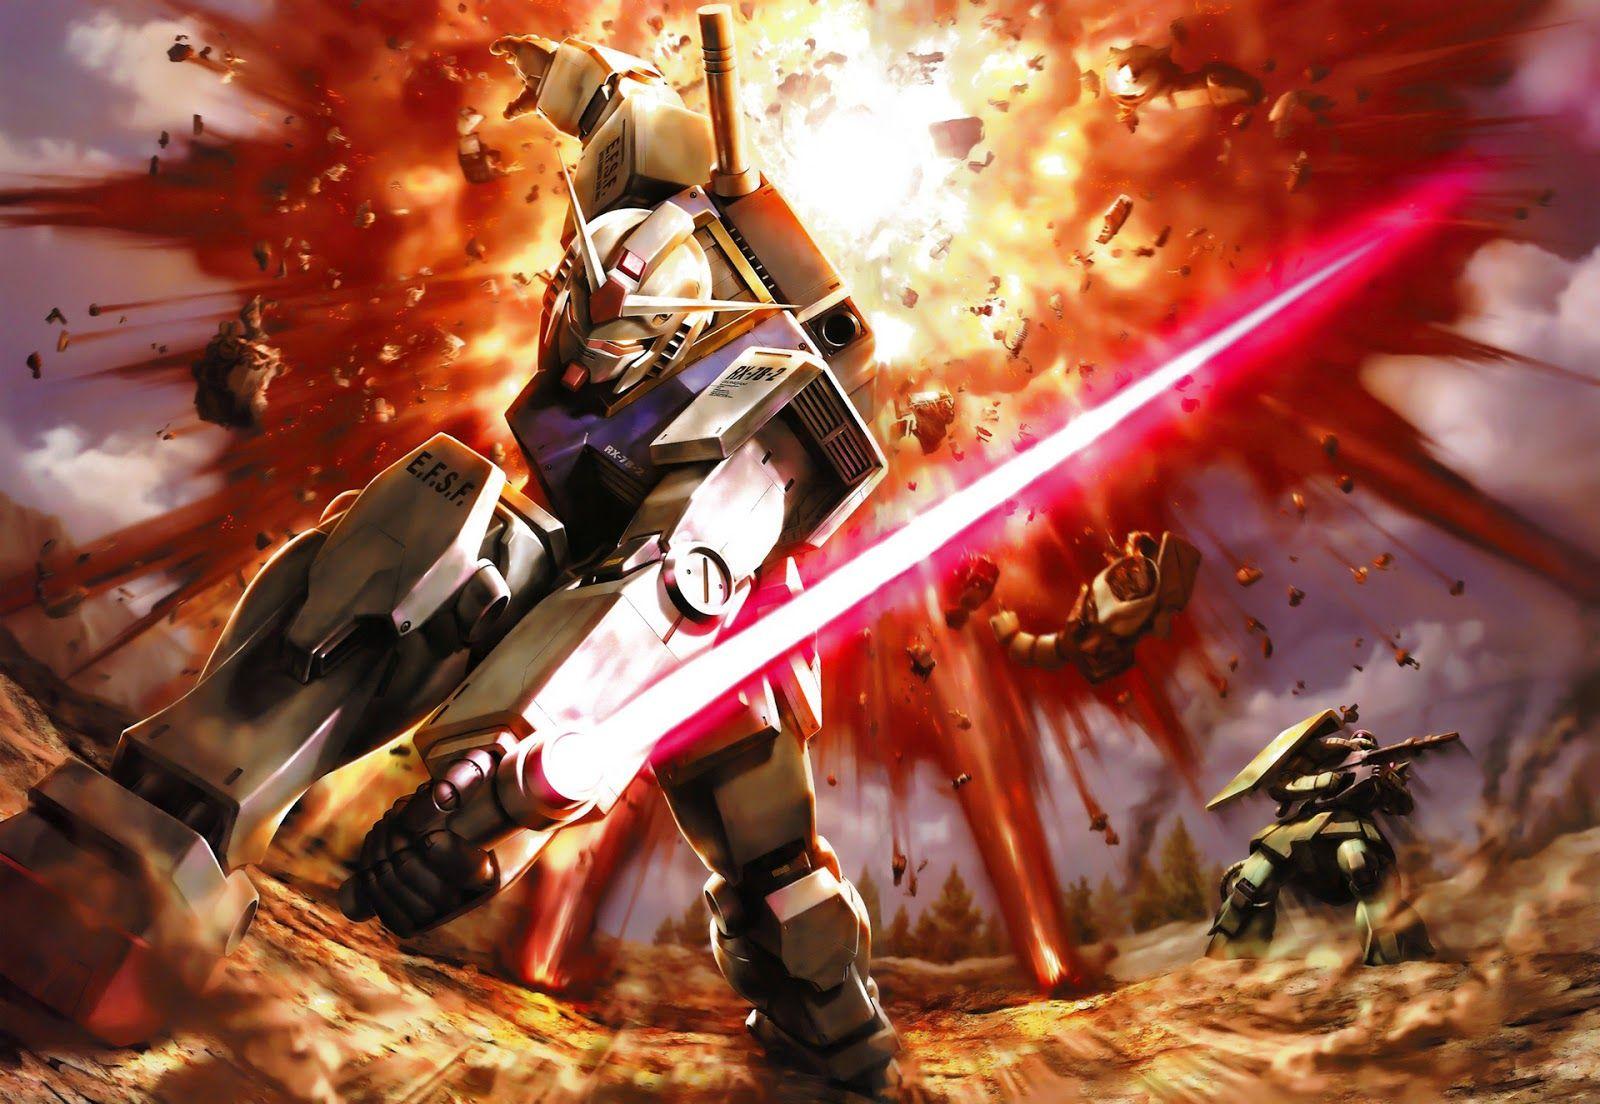 Gundam Fighting Mecha Robot 0974 HD Wallpaper. poses